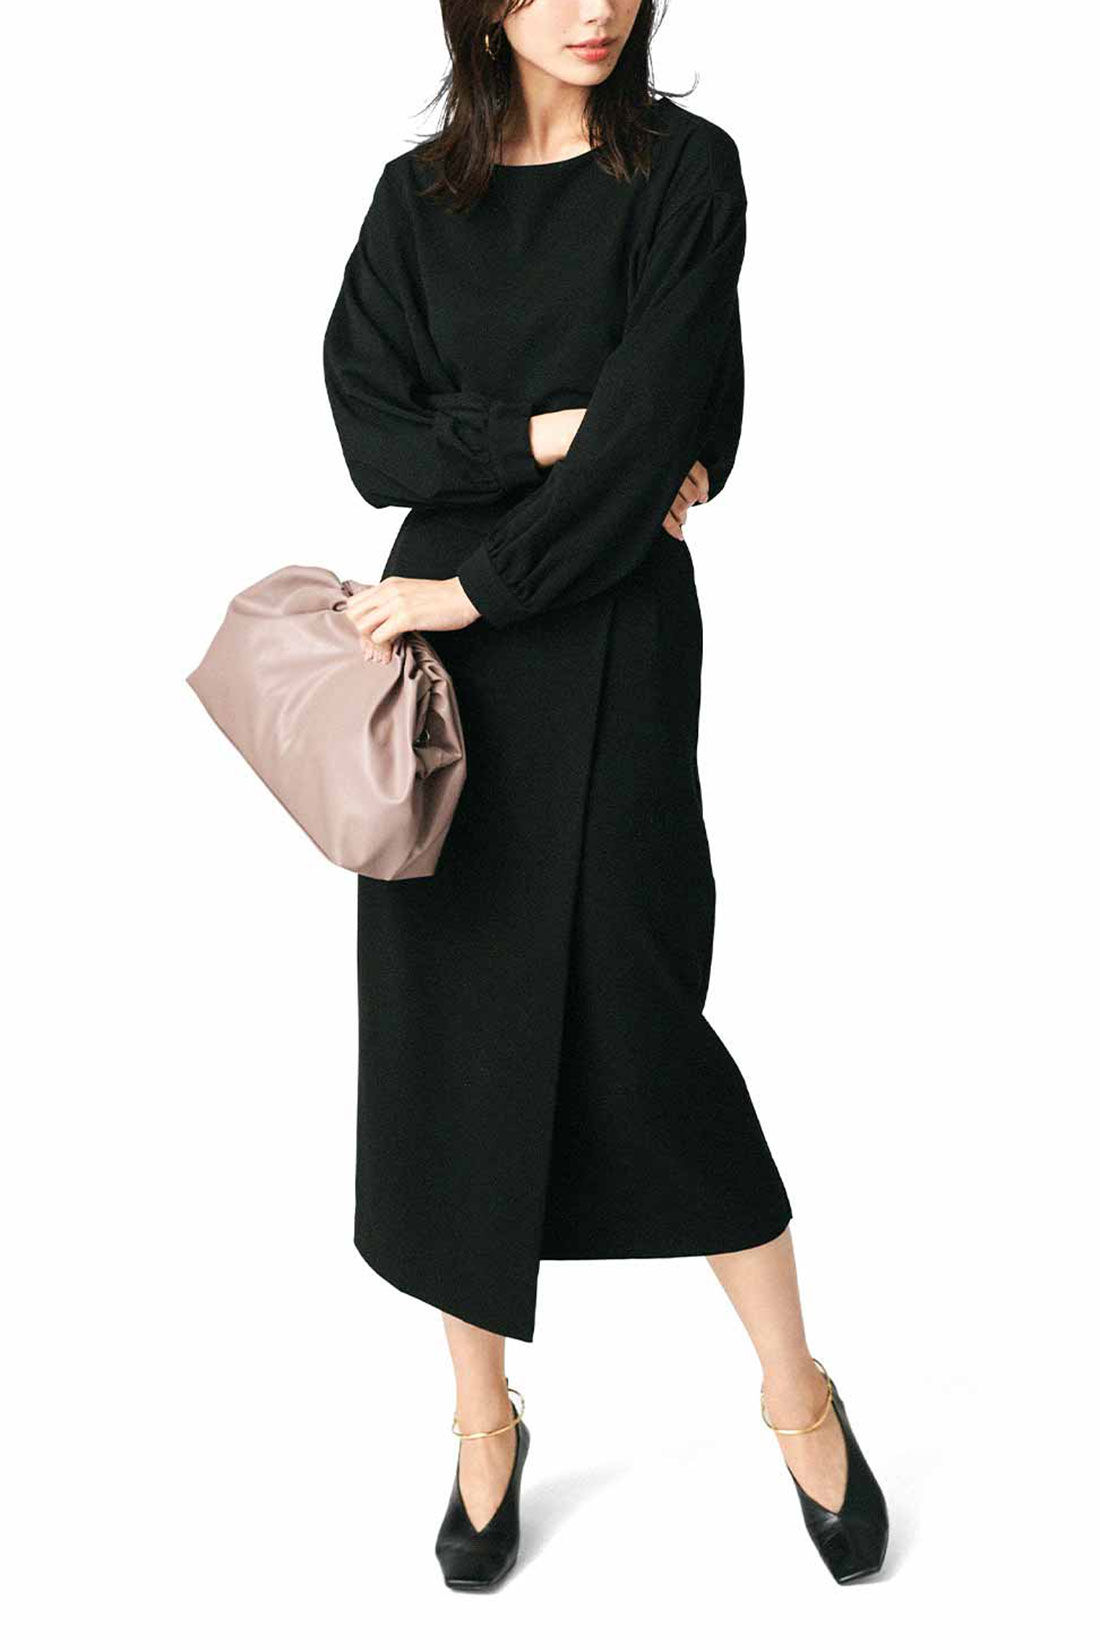 IEDIT|IEDIT[イディット]　いつもキレイな黒が続く オンオフ万能純黒デザインスカート〈ブラック〉